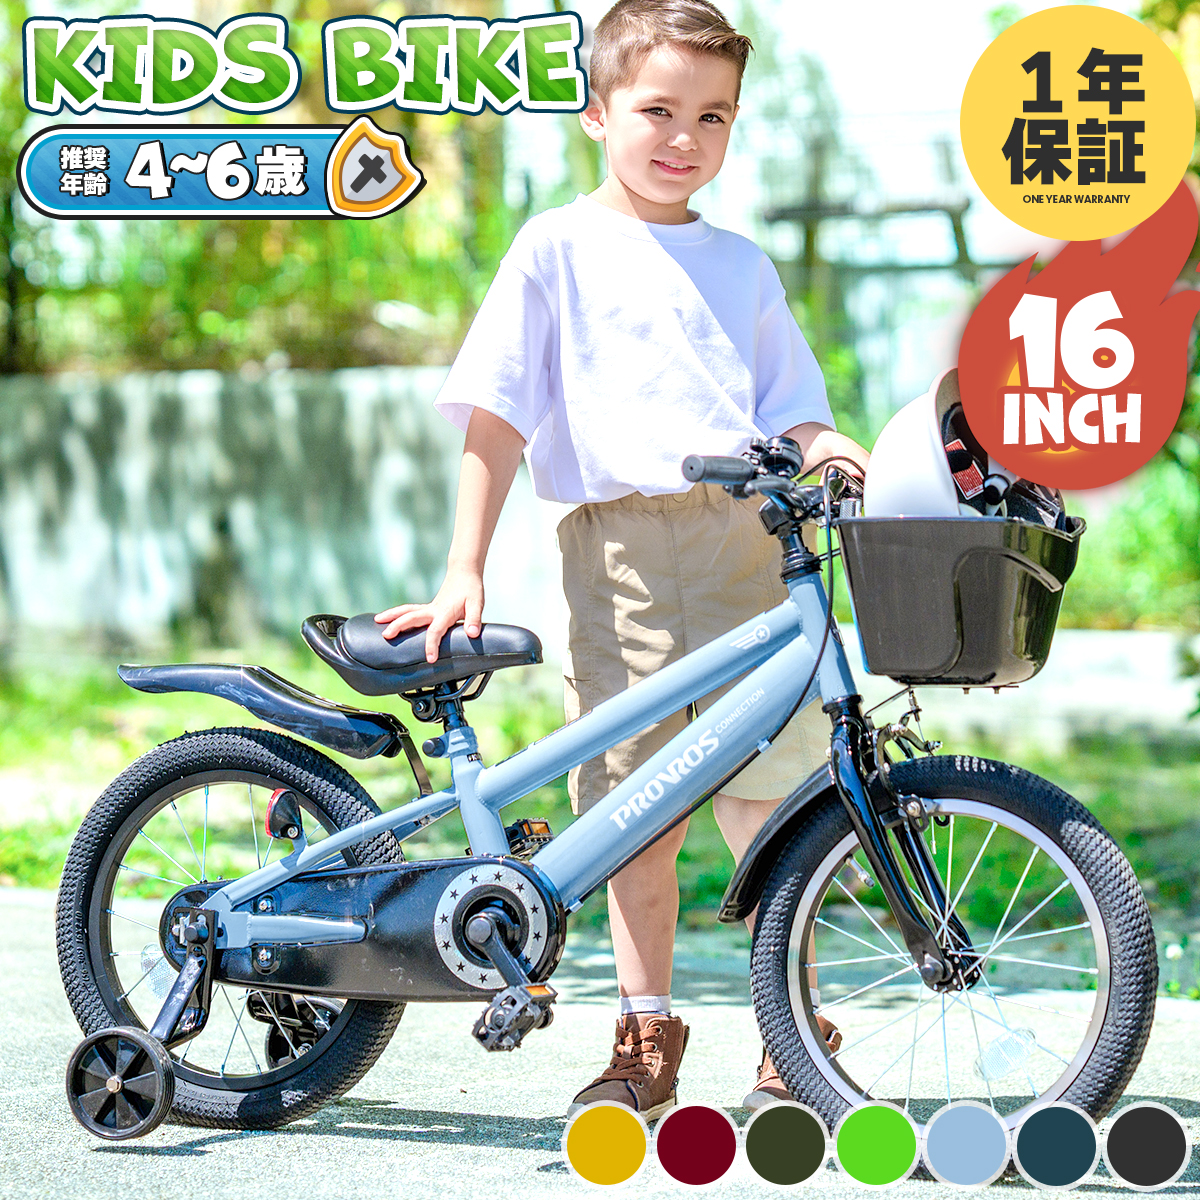 PROVROS 子供用自転車 補助輪付き 16インチ キッズ 幼児 4歳 5歳 6歳 カゴ ギフト 男の子 お祝い 誕生日 クリスマス PKM-16